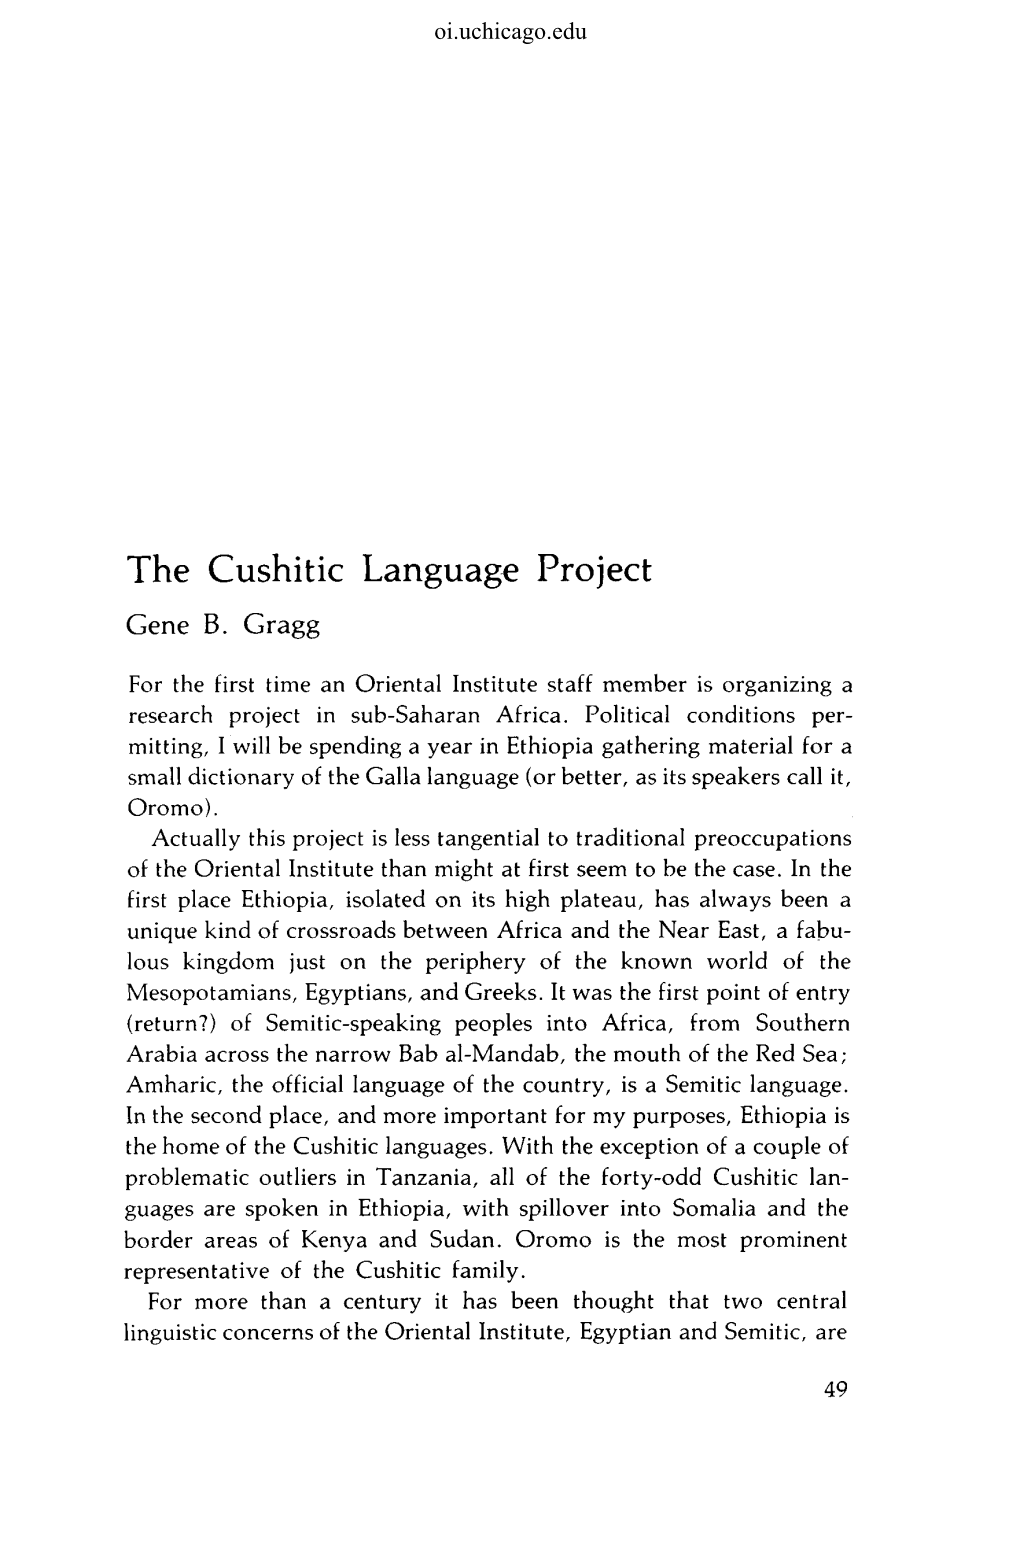 The Cushitic Language Project Gene B